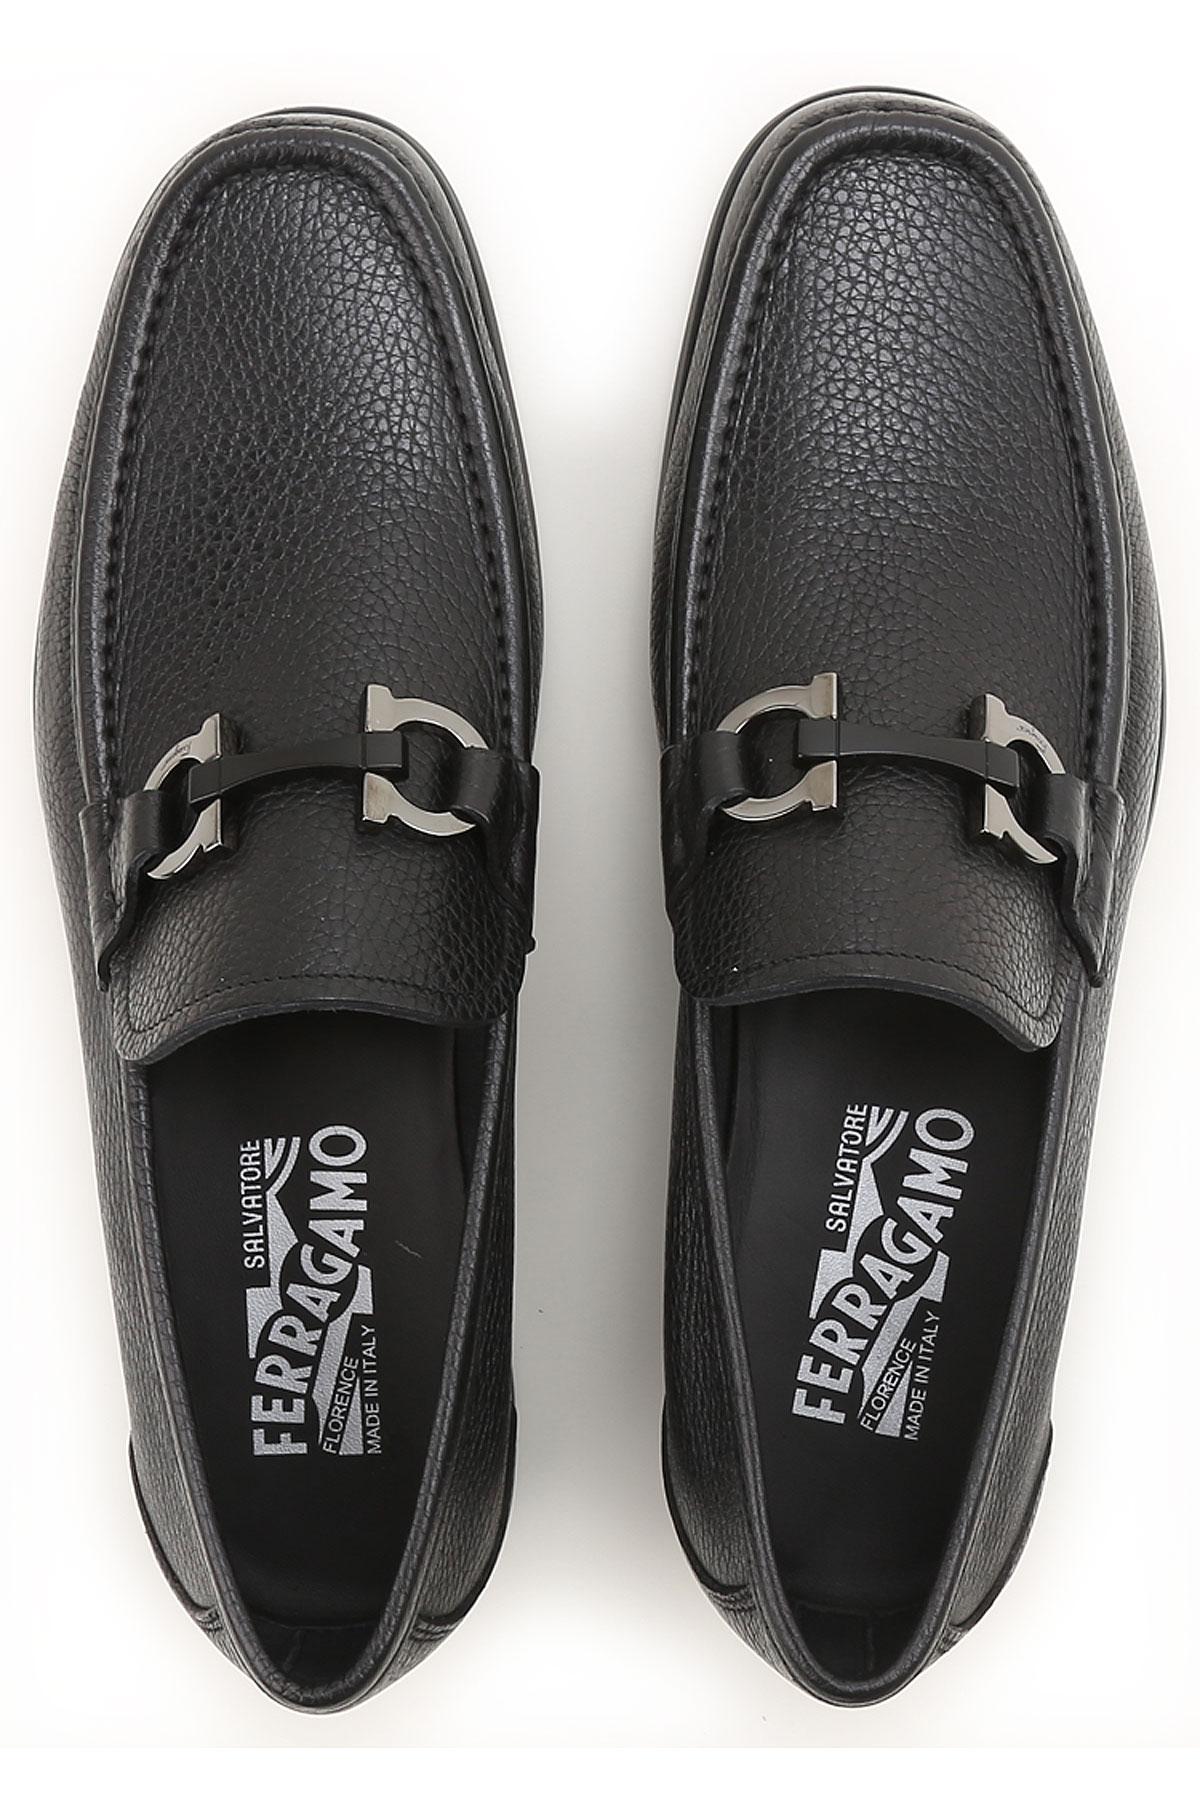 Ferragamo Leather Loafers For Men On Sale in Black for Men - Lyst